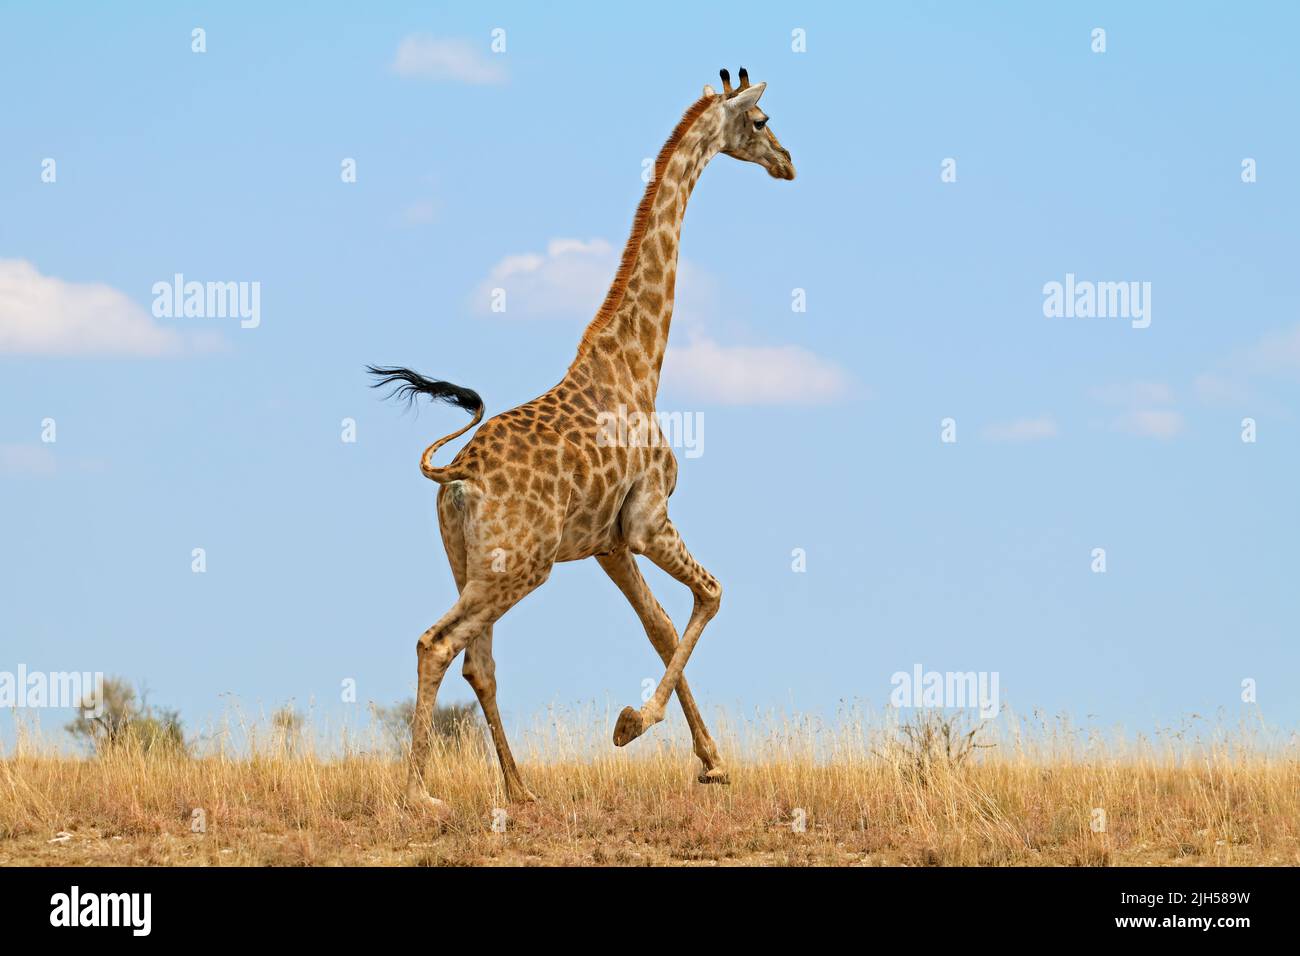 A giraffe (Giraffa camelopardalis) running on the African plains, South Africa Stock Photo